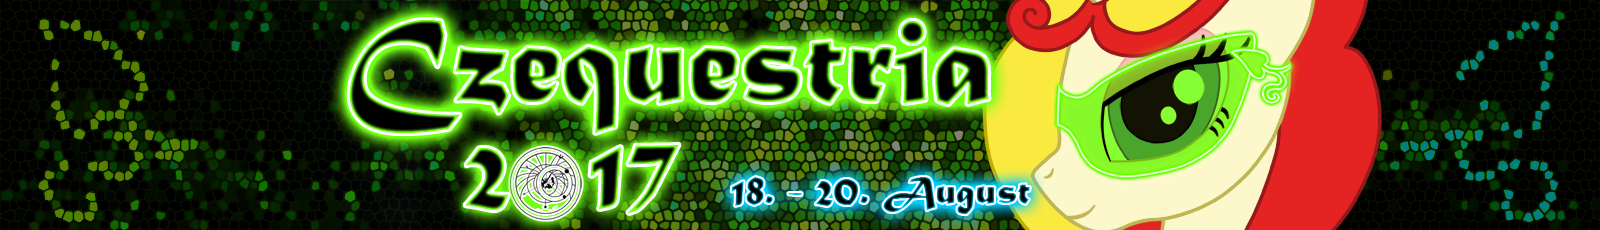 Czequestria 2017 - banner